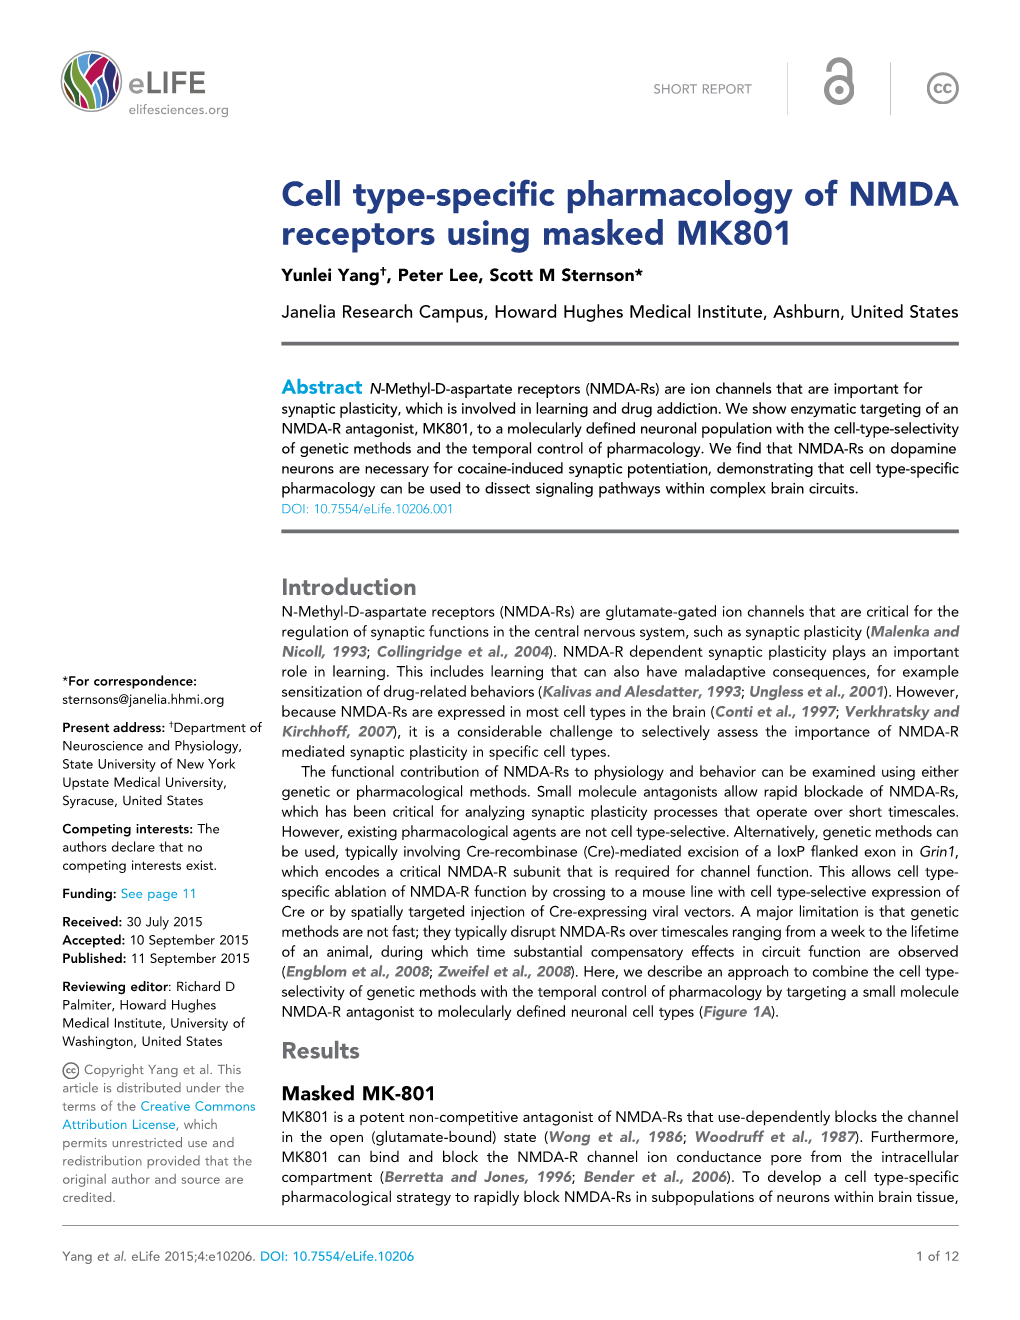 Cell Type-Specific Pharmacology of NMDA Receptors Using Masked MK801 Yunlei Yang†, Peter Lee, Scott M Sternson*